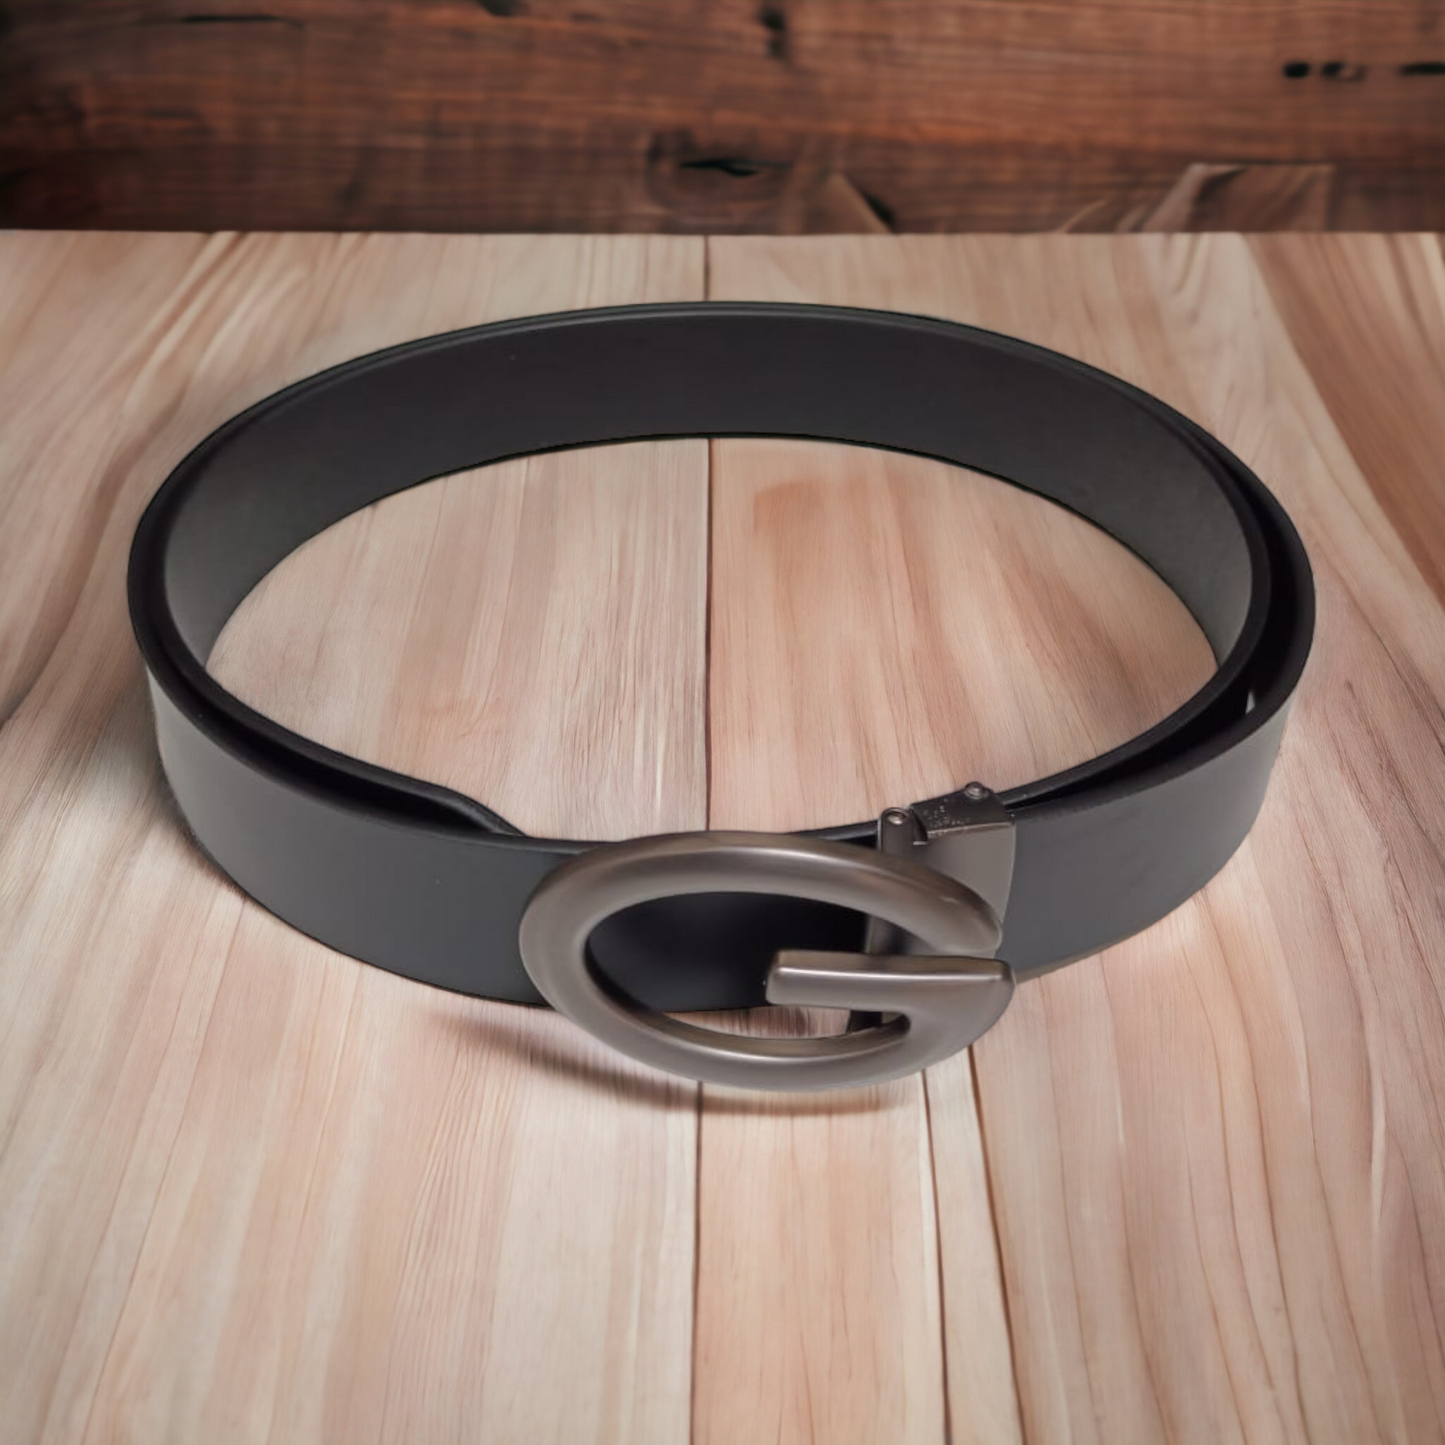 Jack Marc Men's Fashion Pin Buckle Black Belt Size (28-40) 35mm Belt